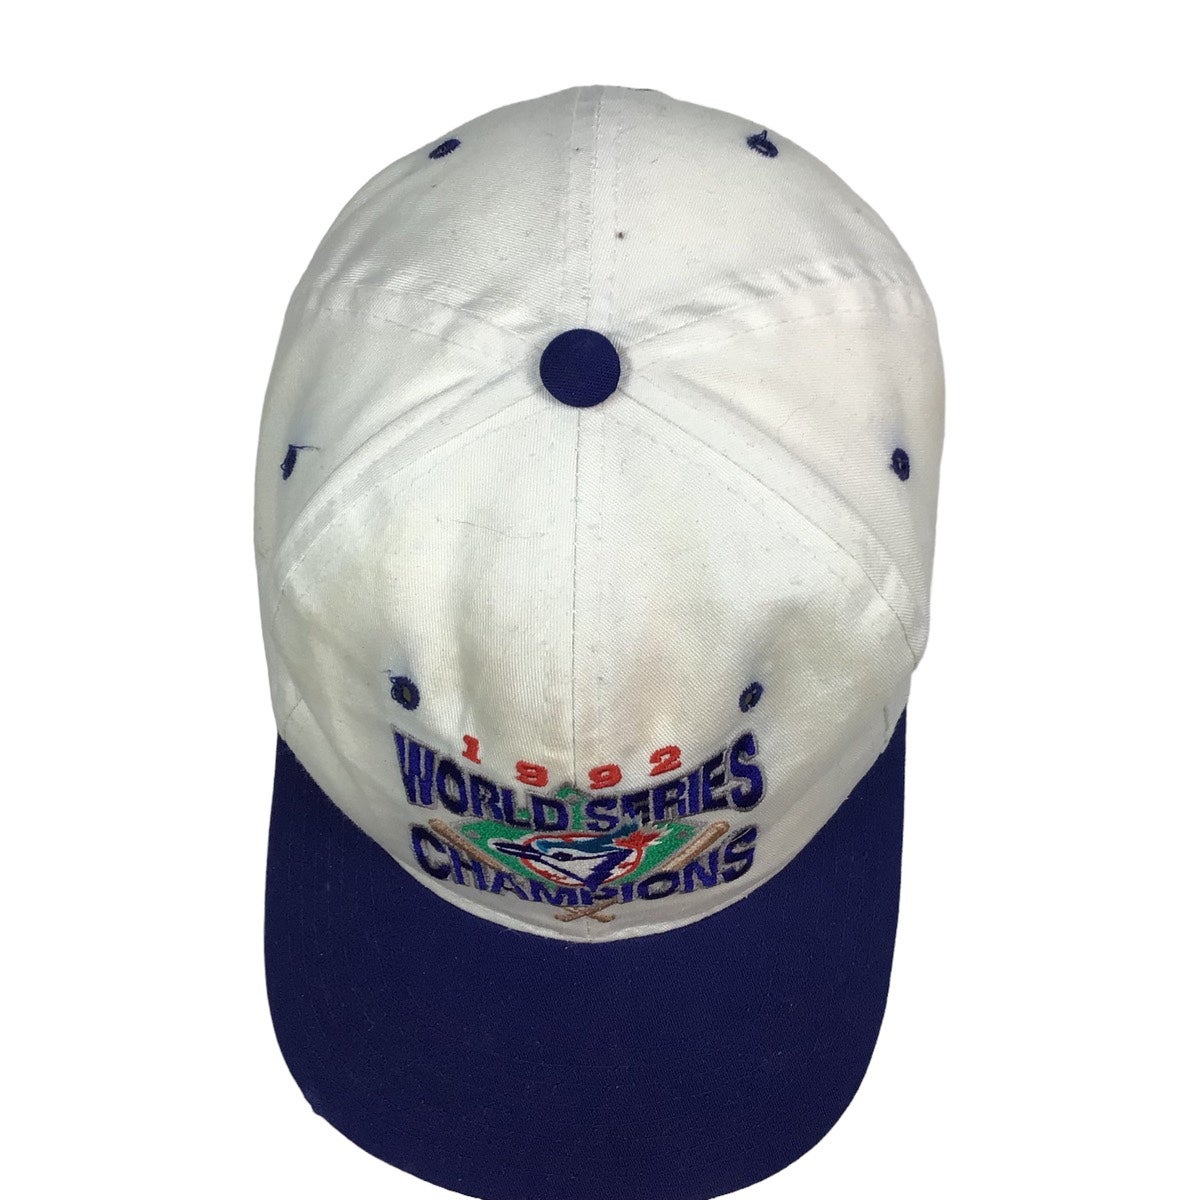 Vintage Toronto Blue Jays 1992 World Series Champions Snapback Hat Starter The Classic - 3 for 3 A.L. East Champs MLB Pinwheel Baseball Cap